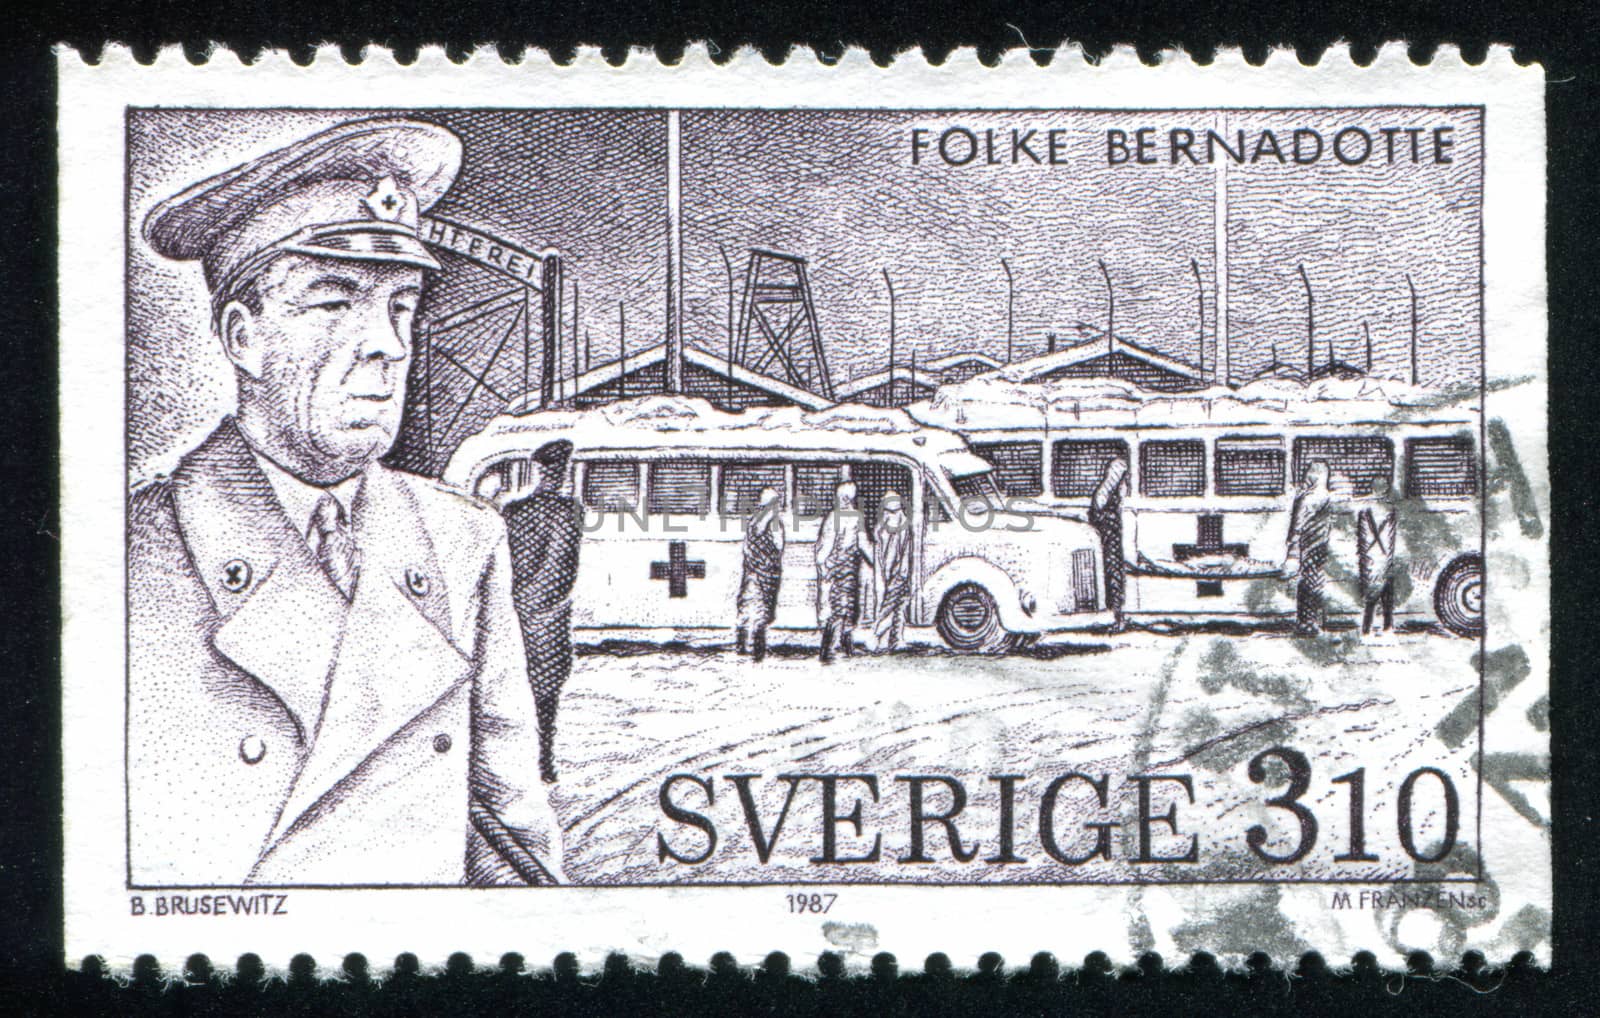 SWEDEN - CIRCA 1987: stamp printed by Sweden, shows Folke Bernadotte af Wisborg, circa 1987